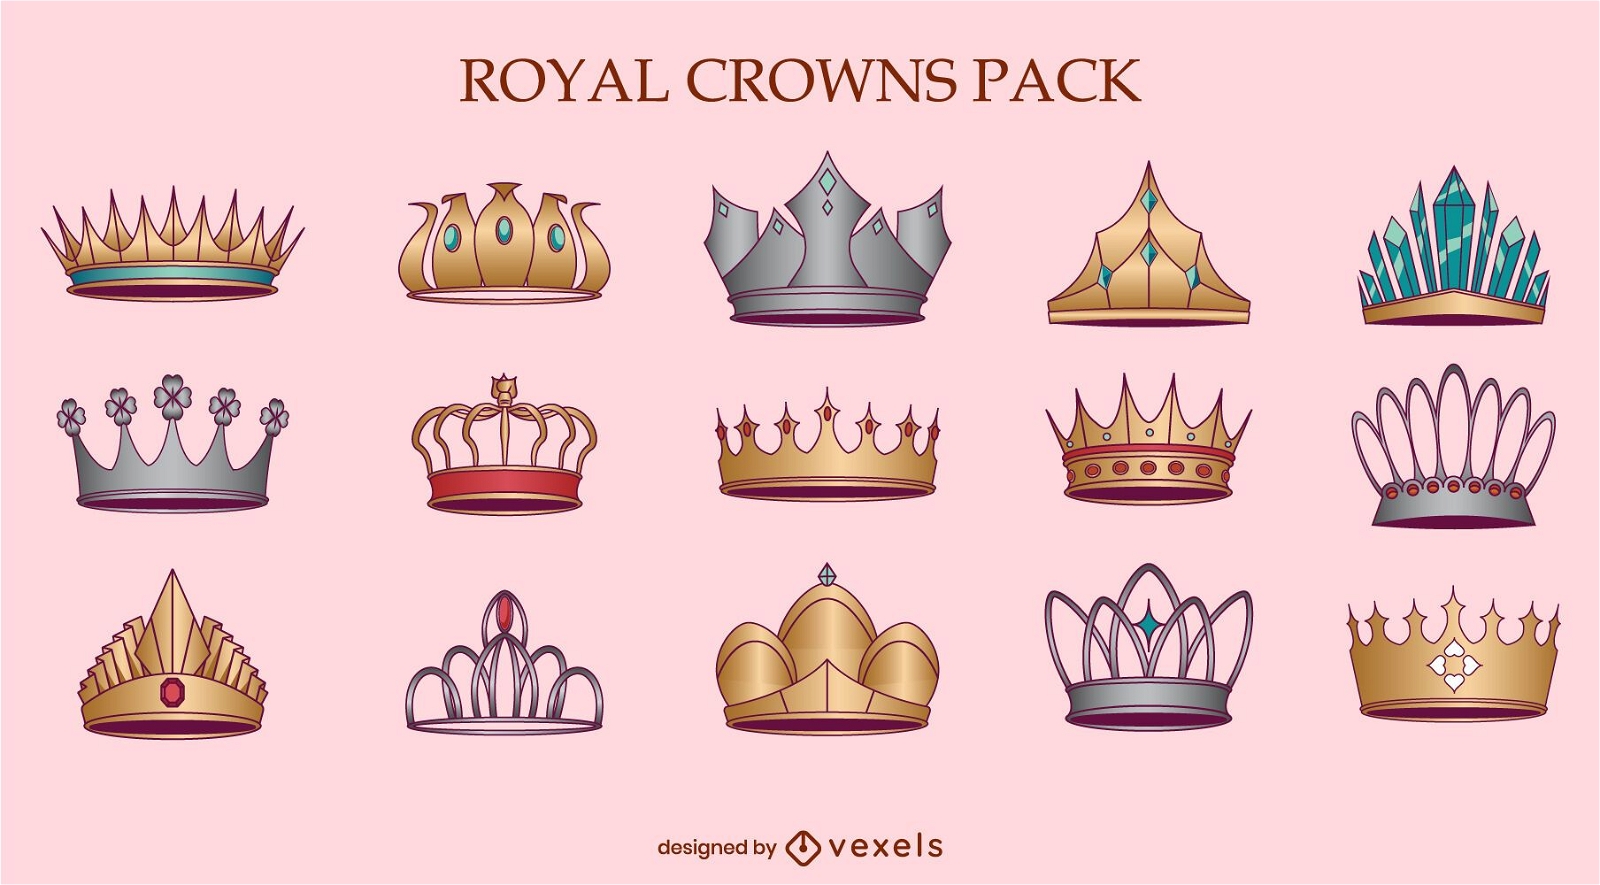 Royal crowns queen illustration set